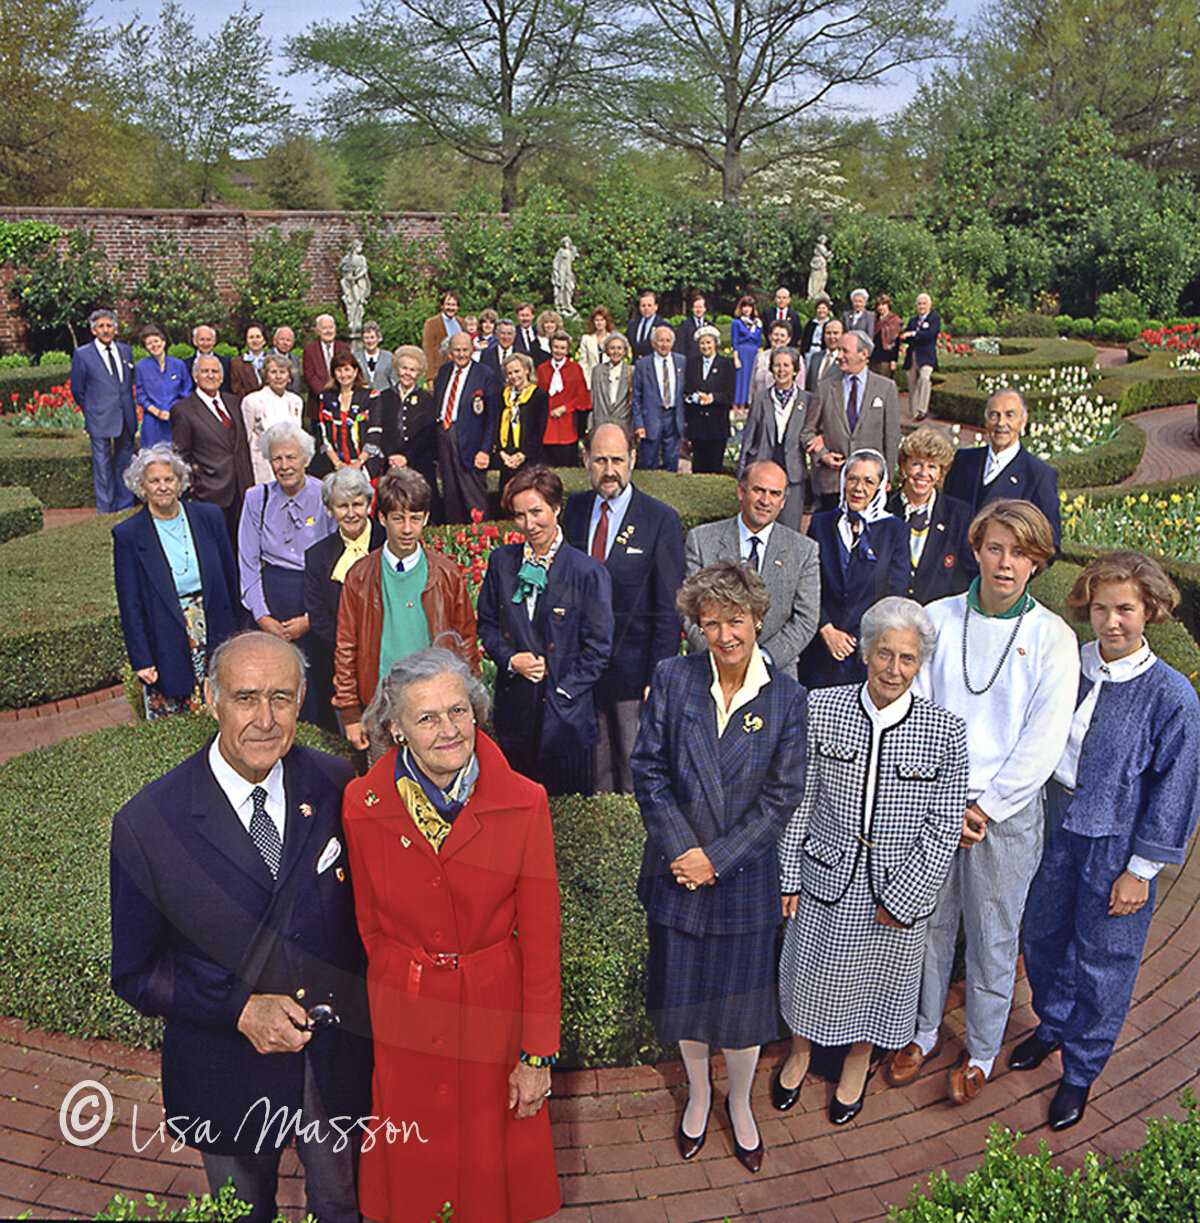 Degraffenreid Family Reunion @ Tyron Palace Gardens for Town & Country Magazine